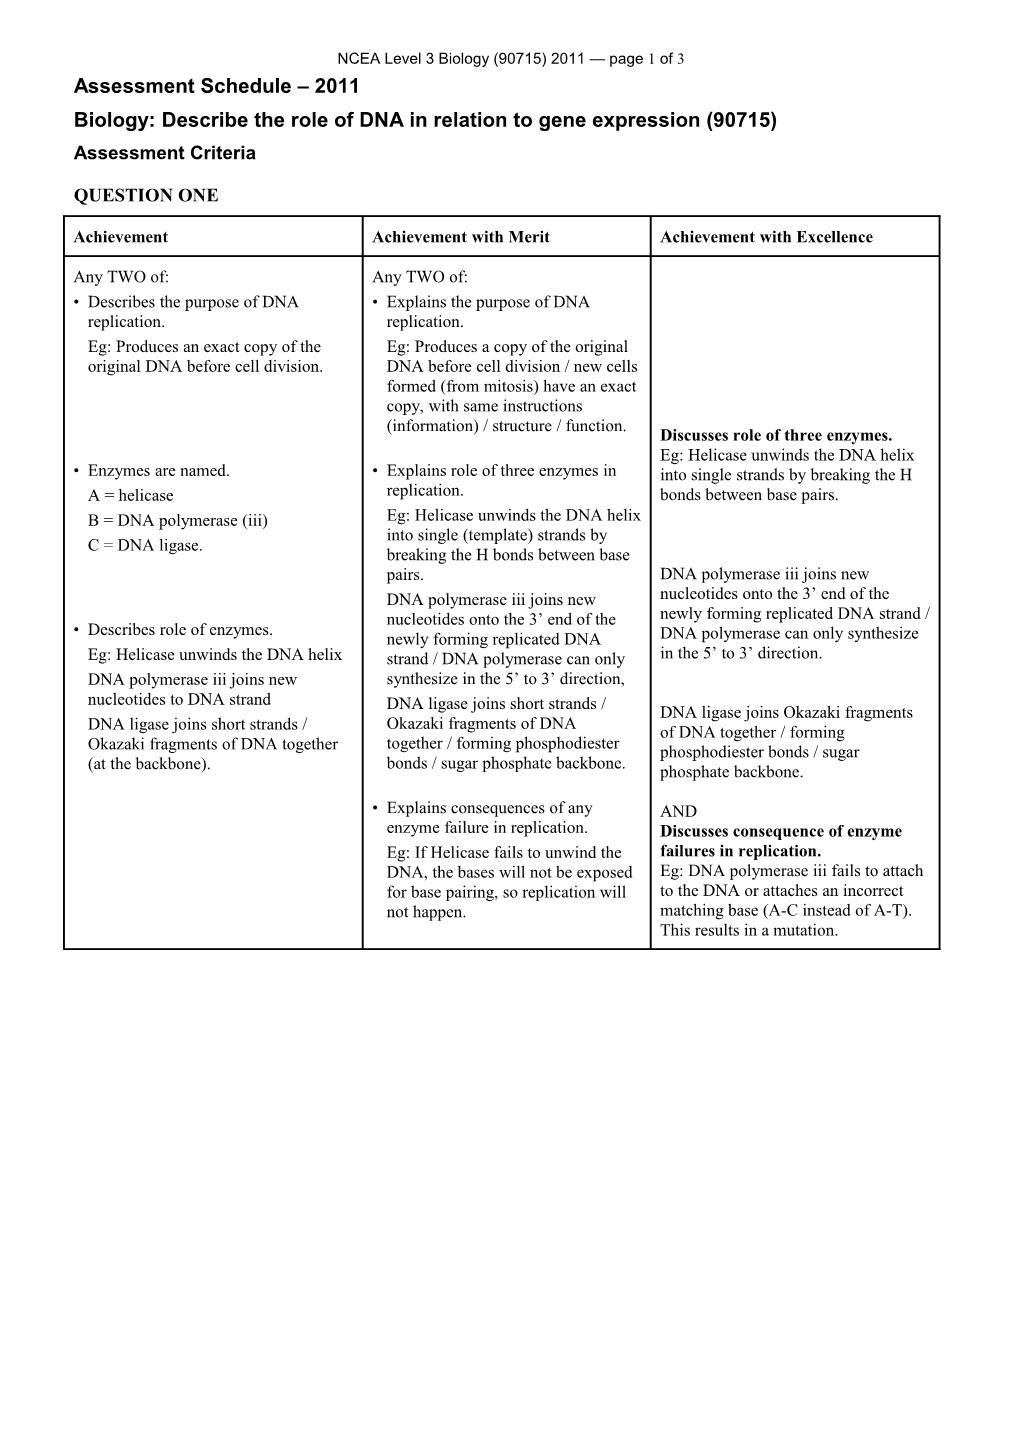 Level 3 Biology (90715) 2011 Assessment Schedule